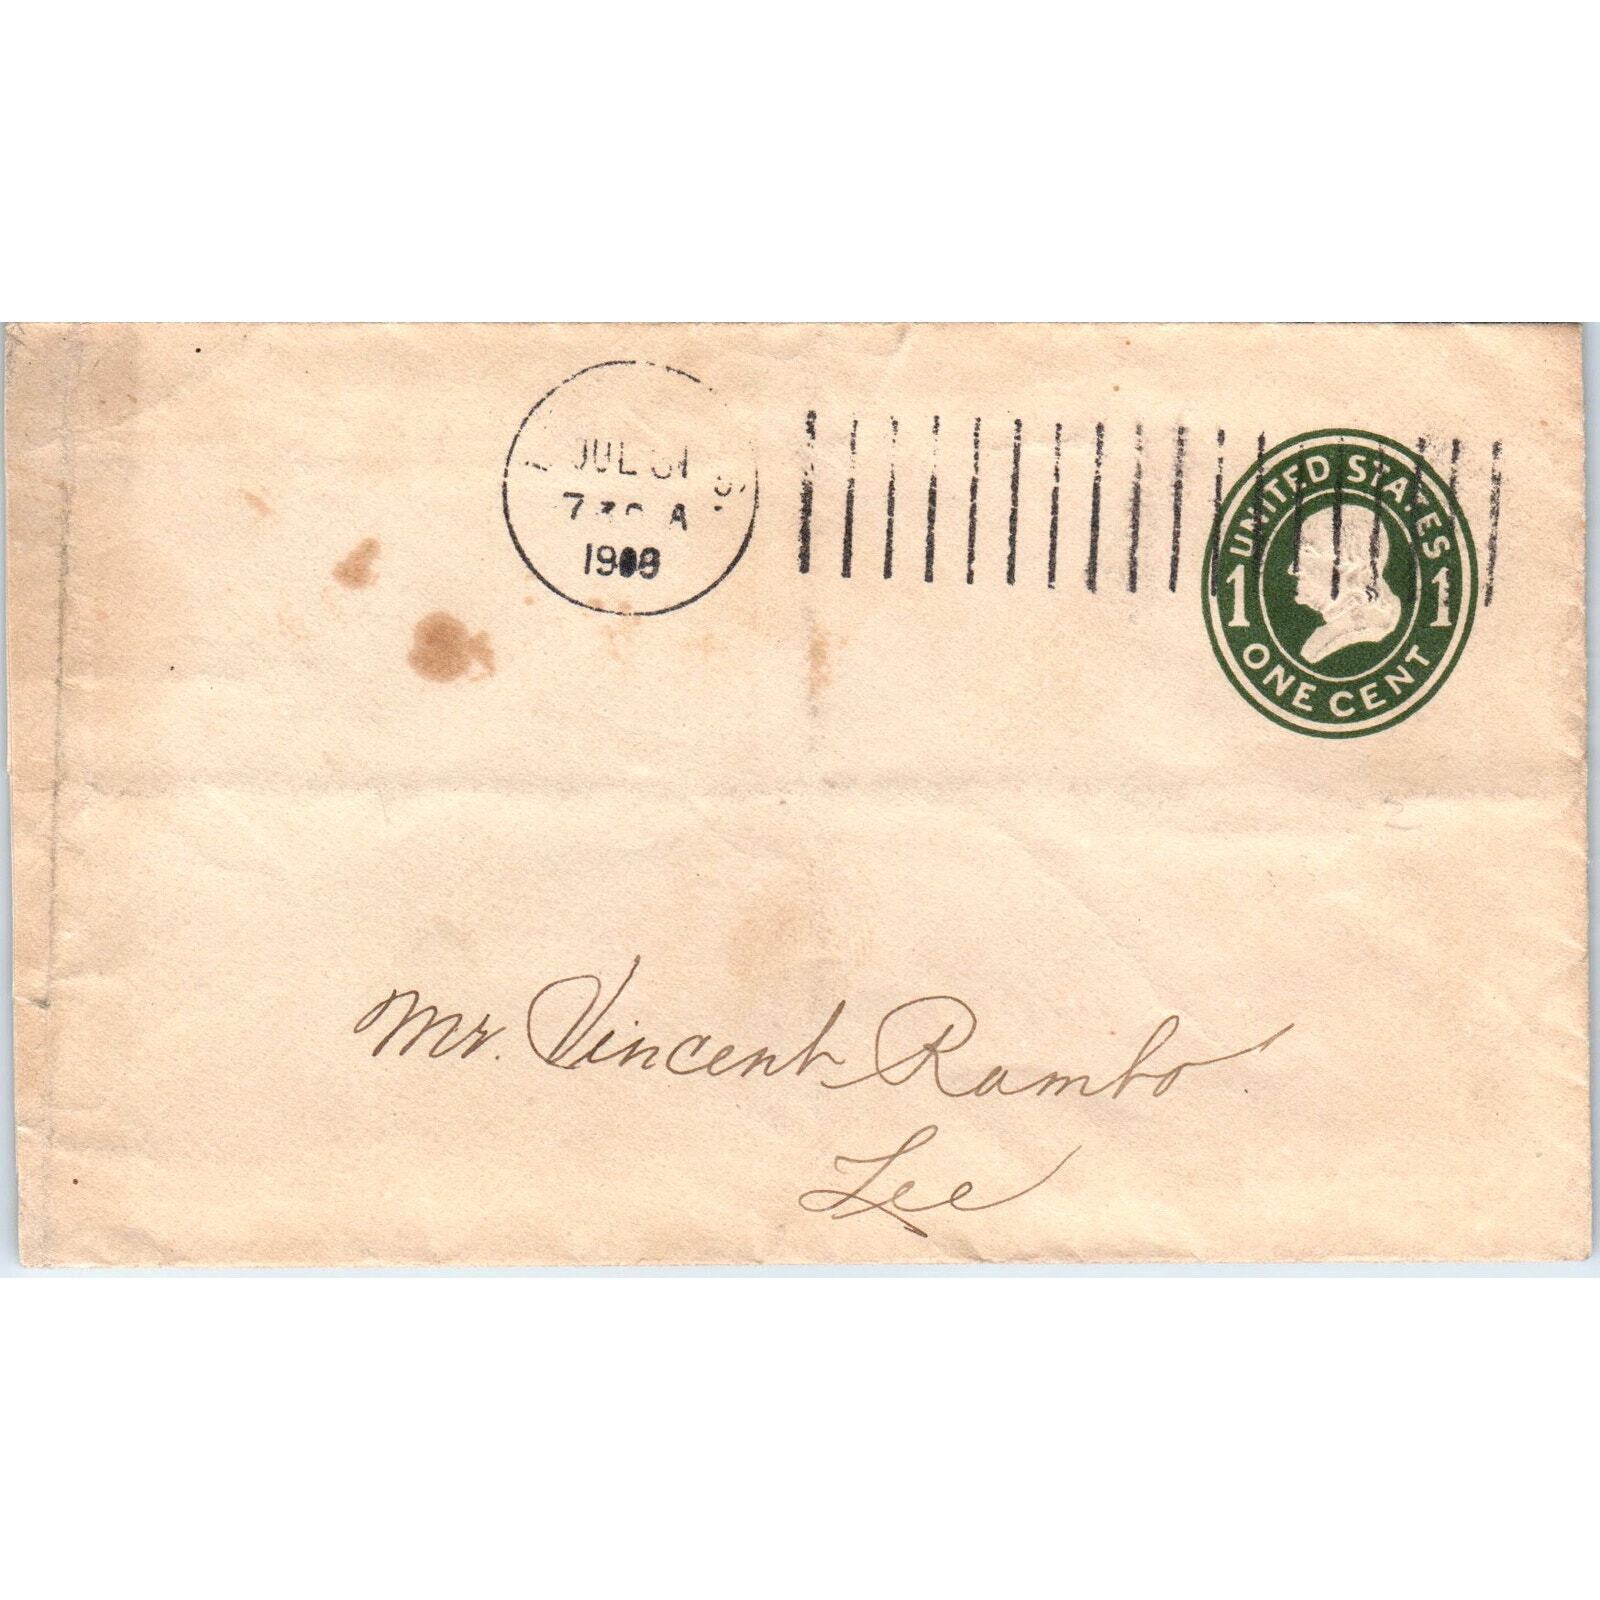 1908 Mr. Vincent Rambo Lee Postal Cover Envelope TG7-PC2